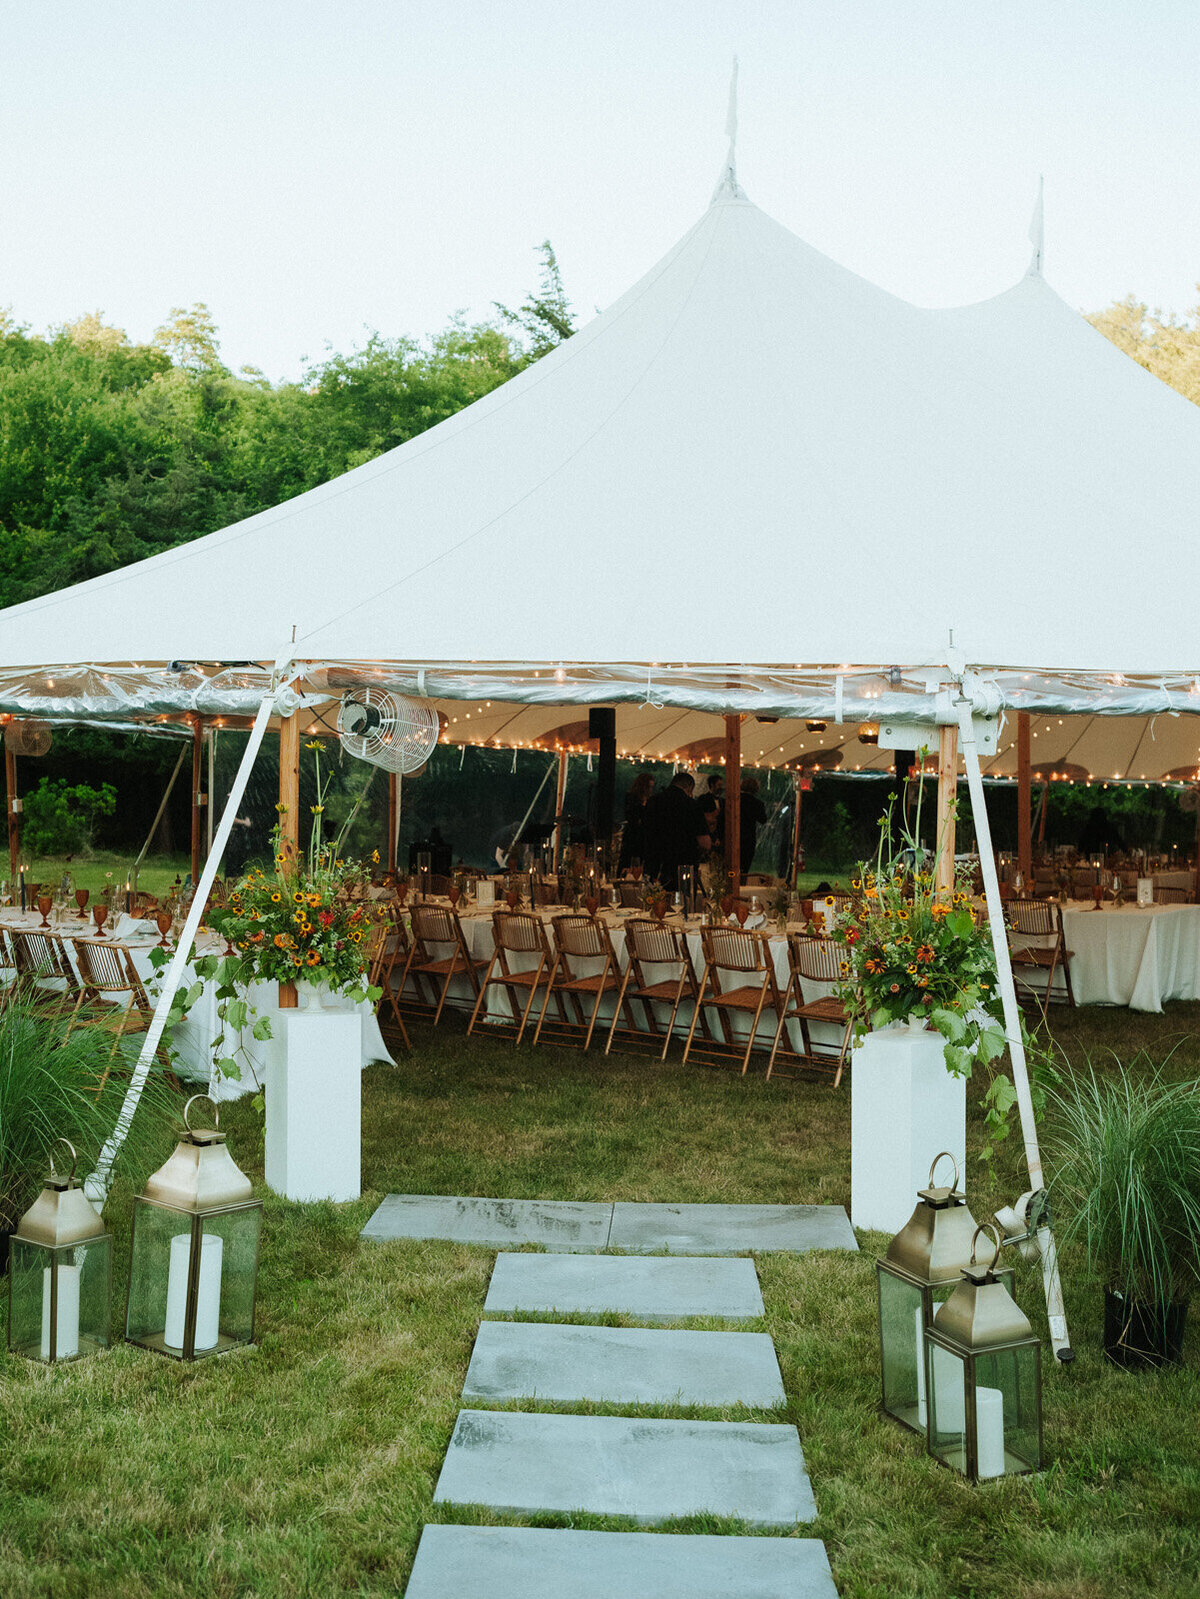 Kate-Murtaugh-Events-Massachusetts-tented-wedding-planner